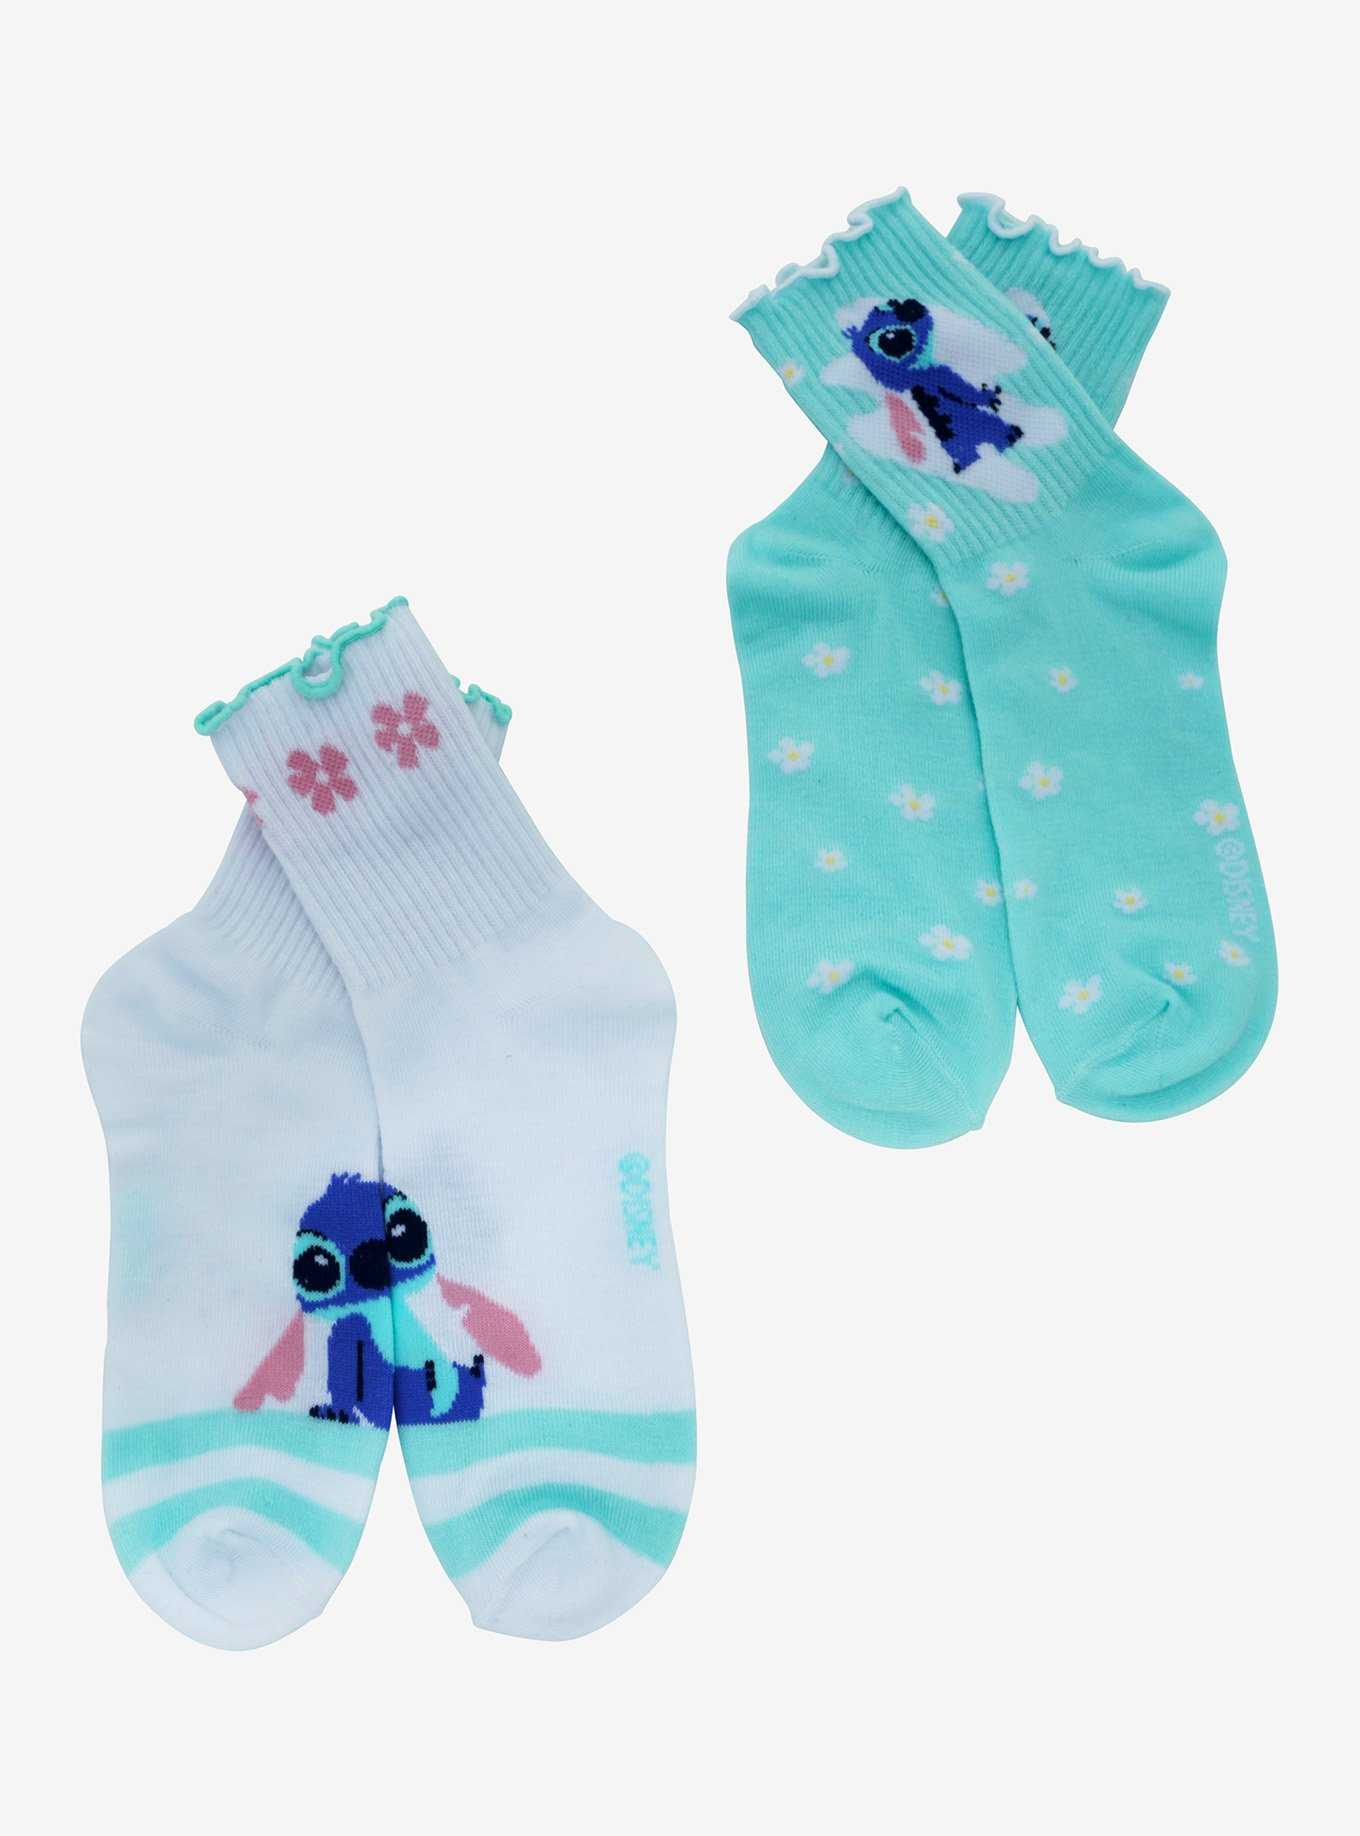 Disney Lilo & Stitch Flowers Crew Socks 2 Pair, , hi-res